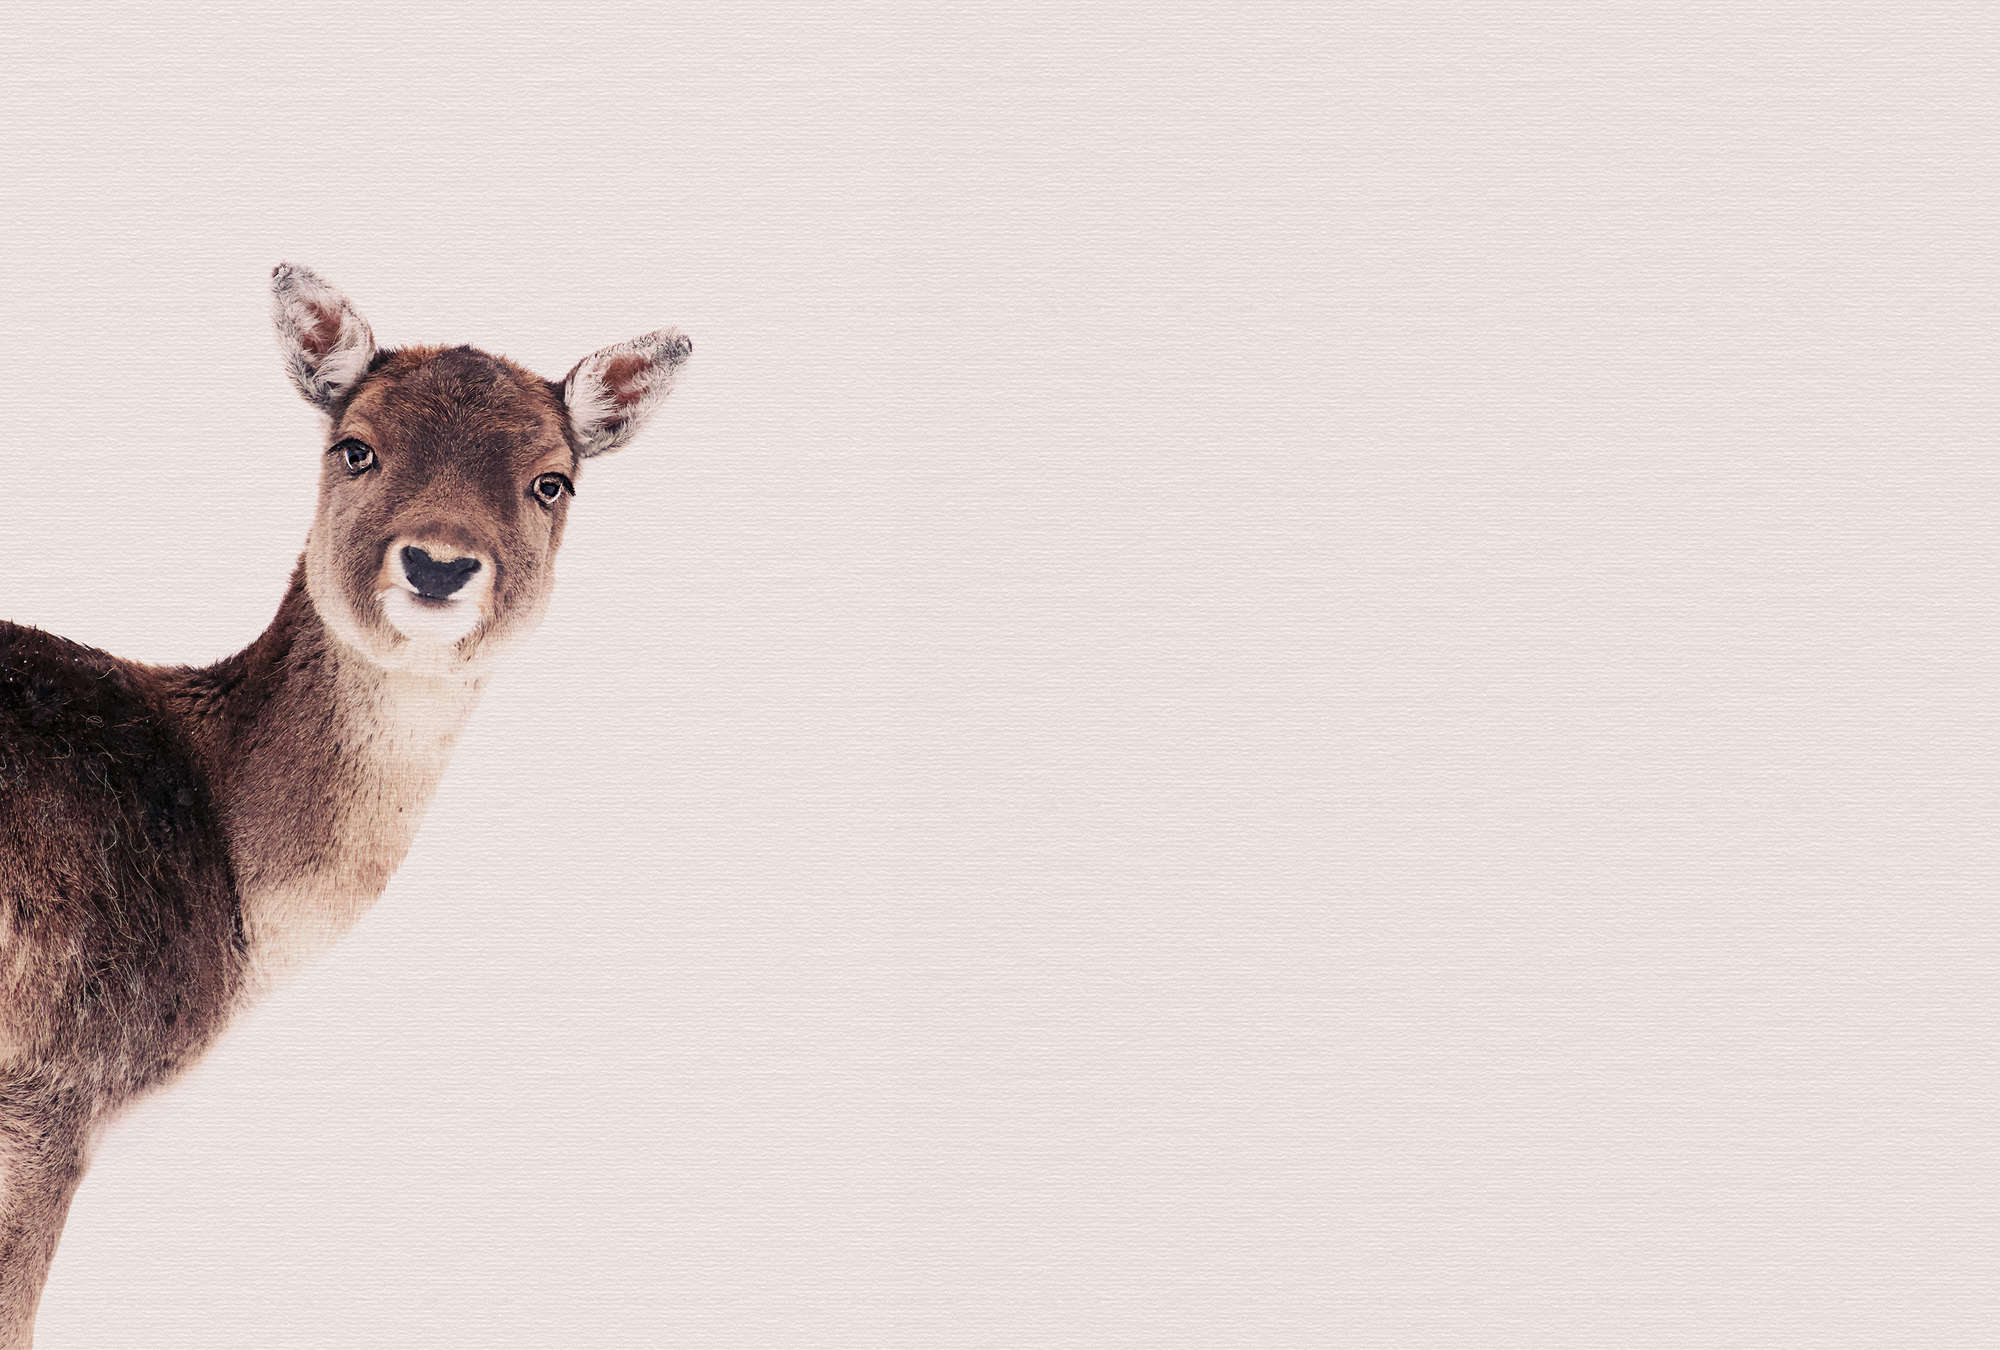             Forest animal mural deer in sepia portrait look
        